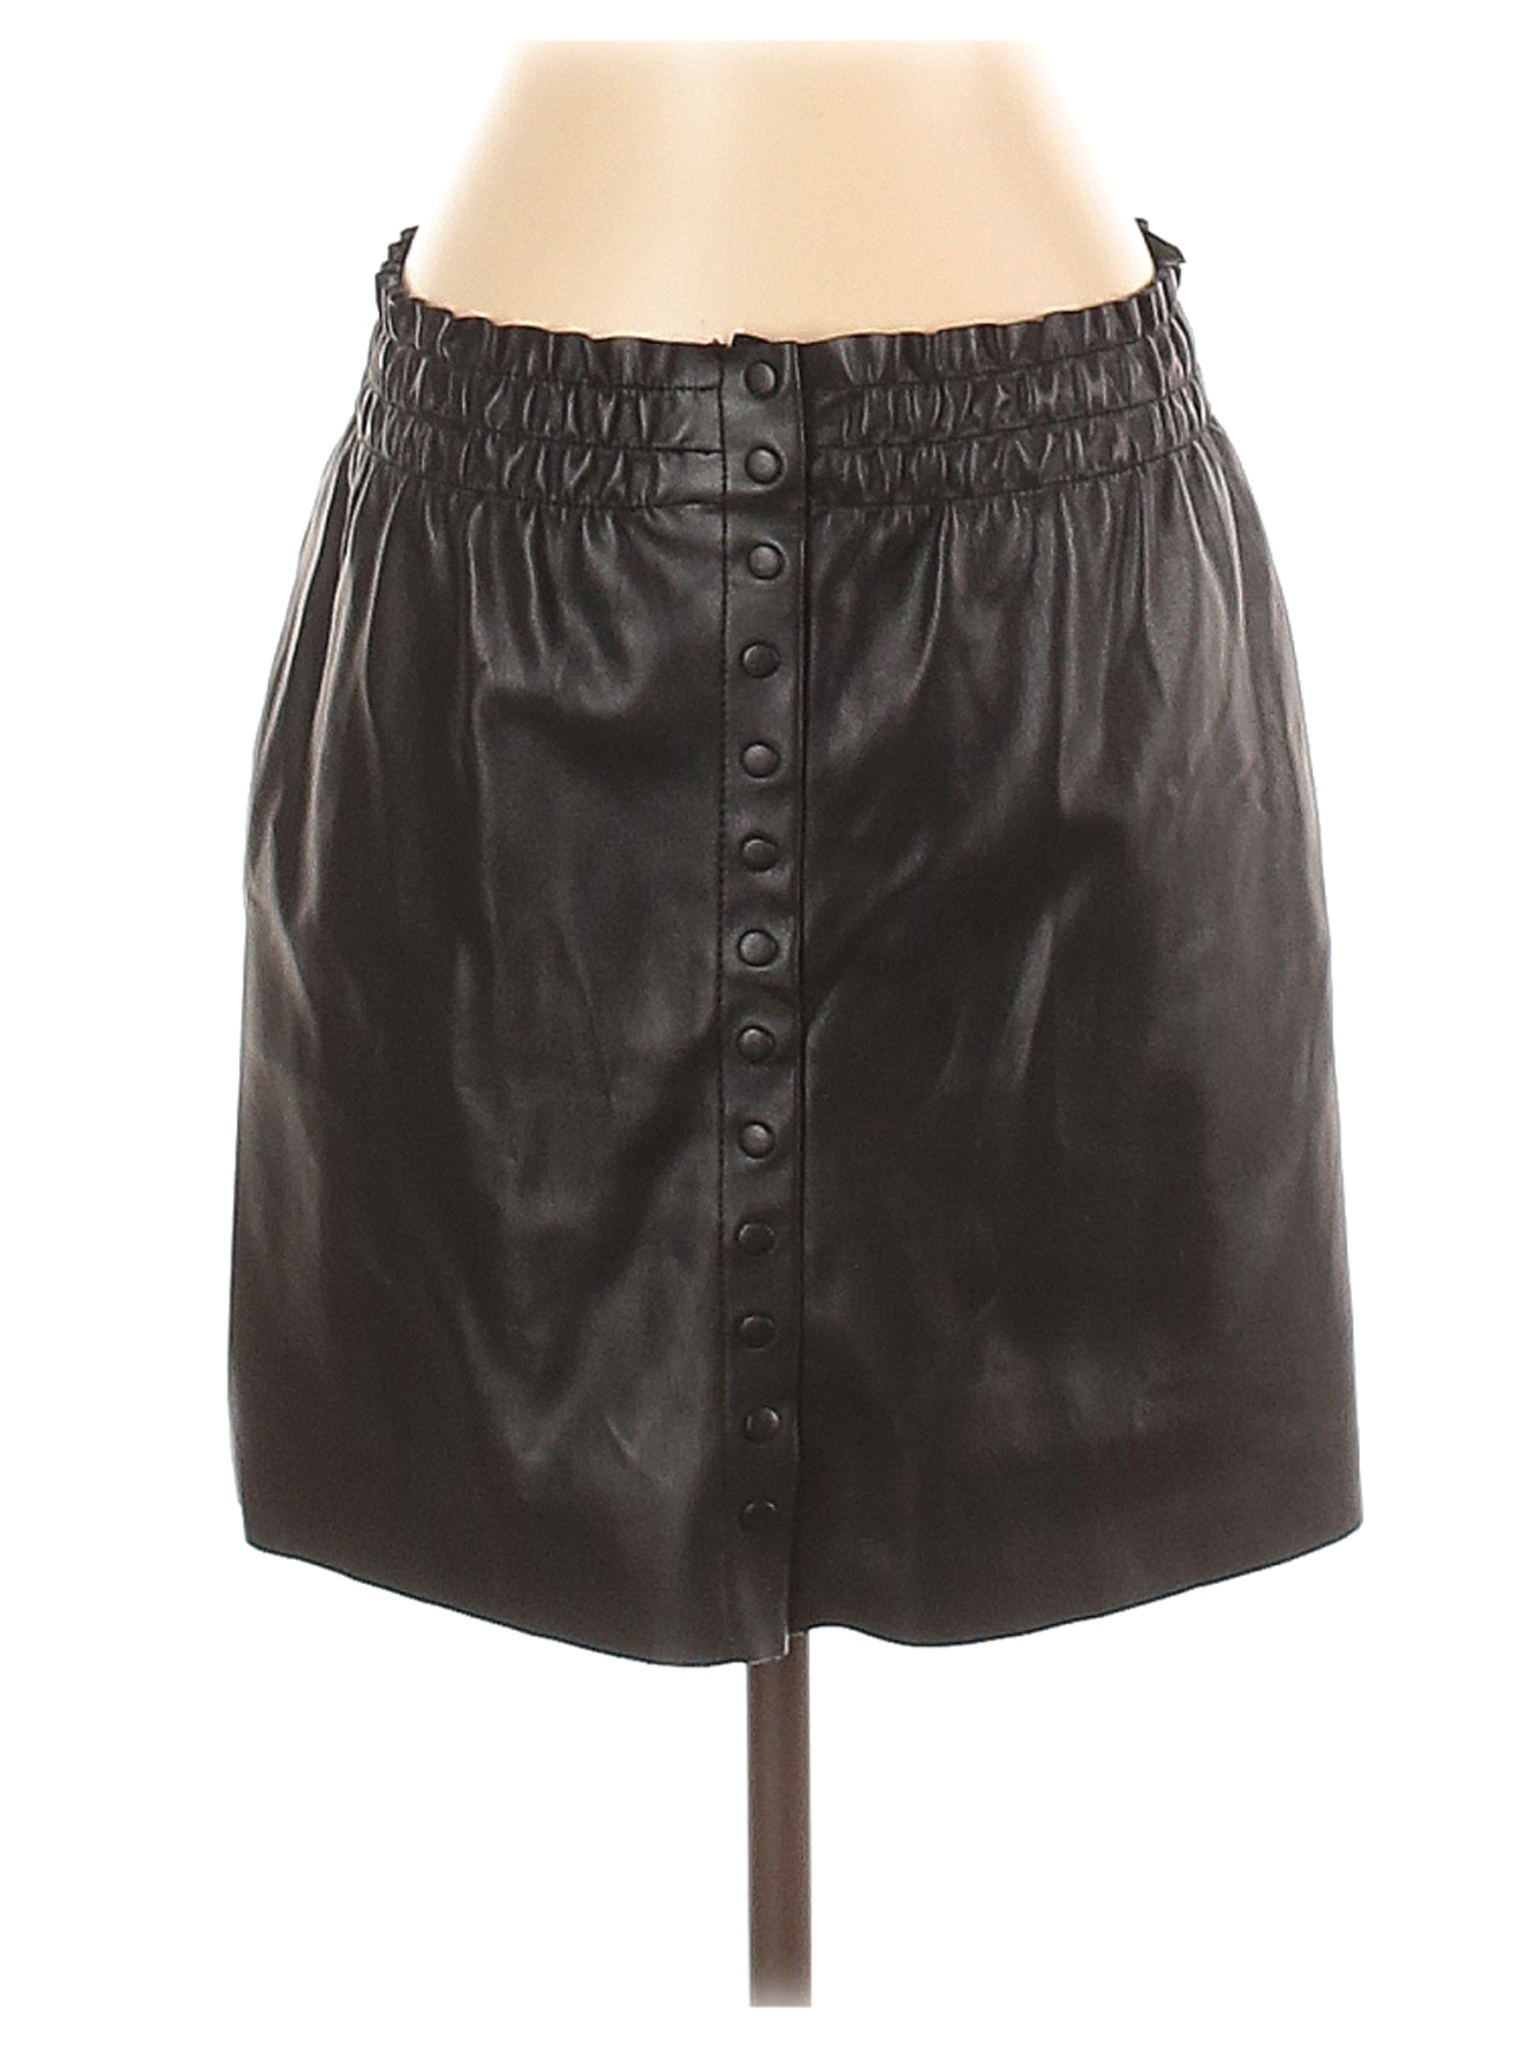 Zara Women Black Faux Leather Skirt S | eBay